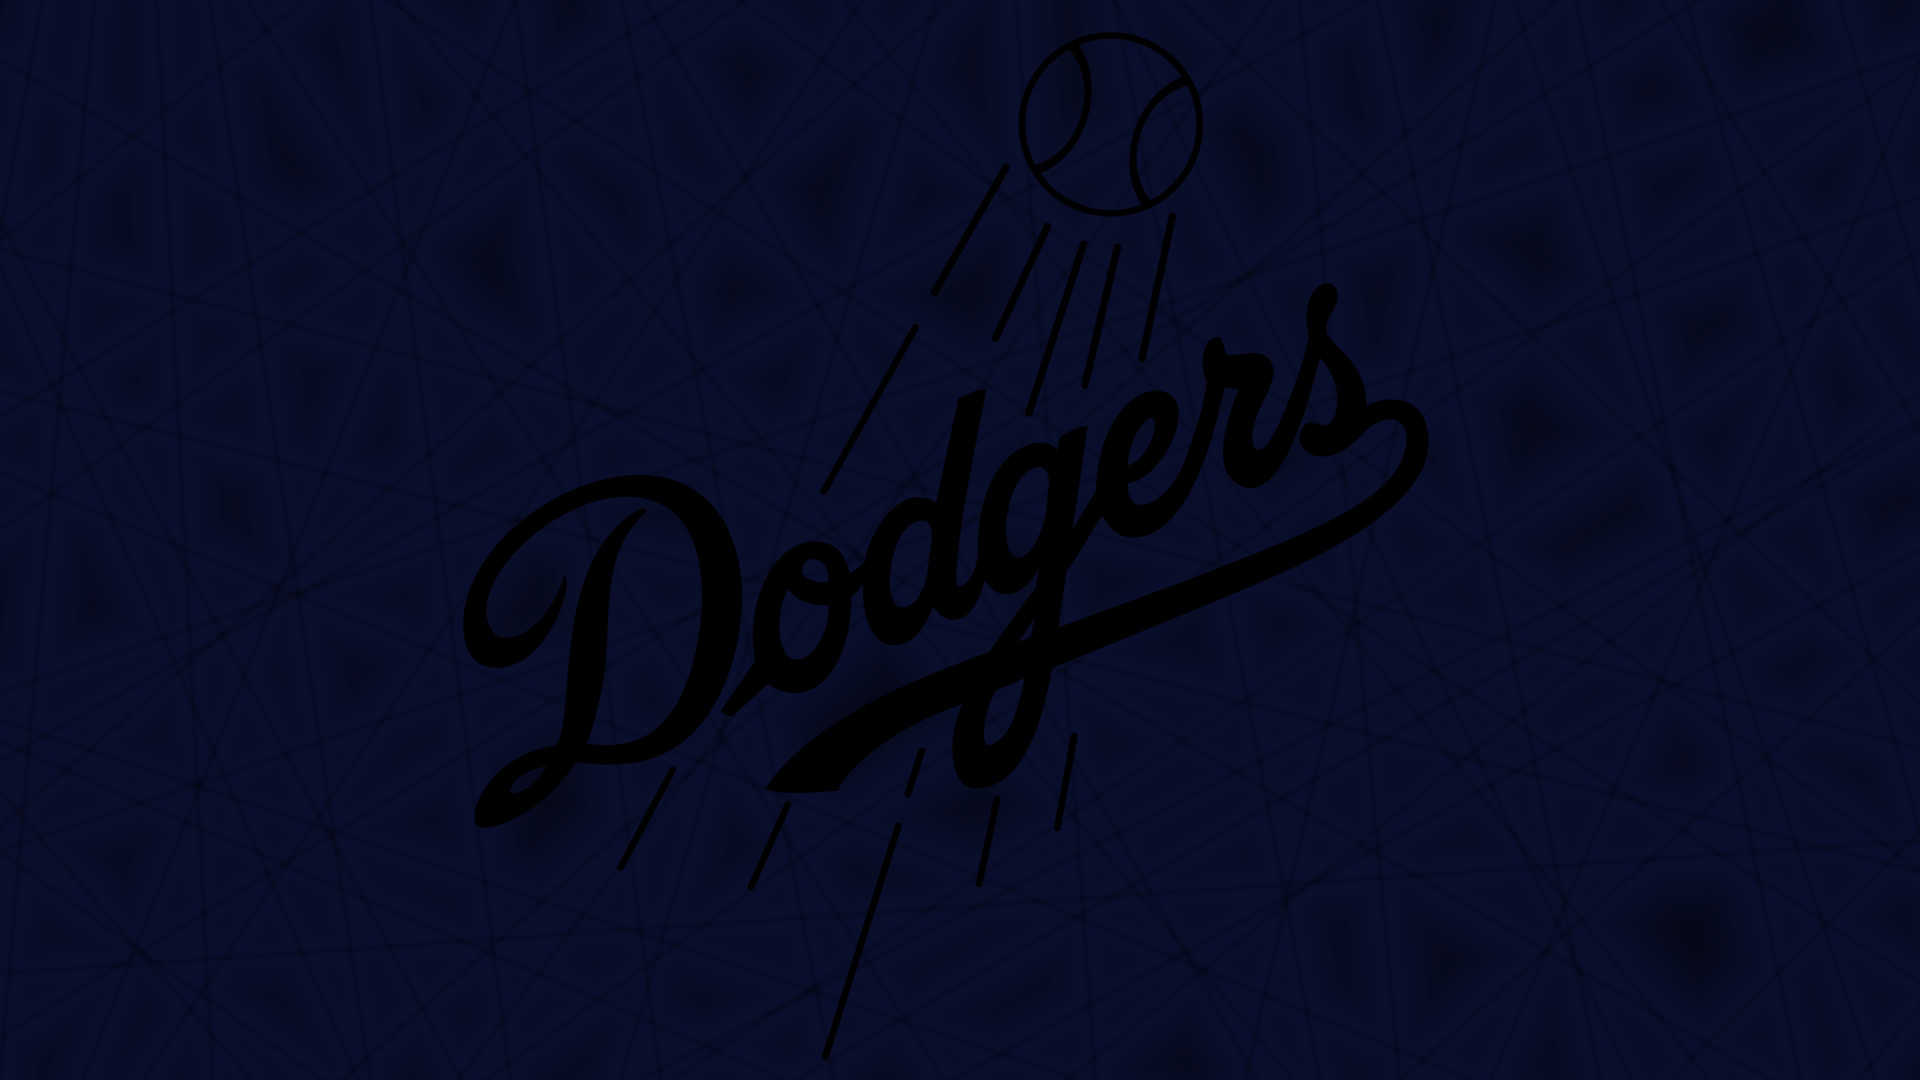 1920x1080 Los Angeles Dodgers Wallpaper 50292